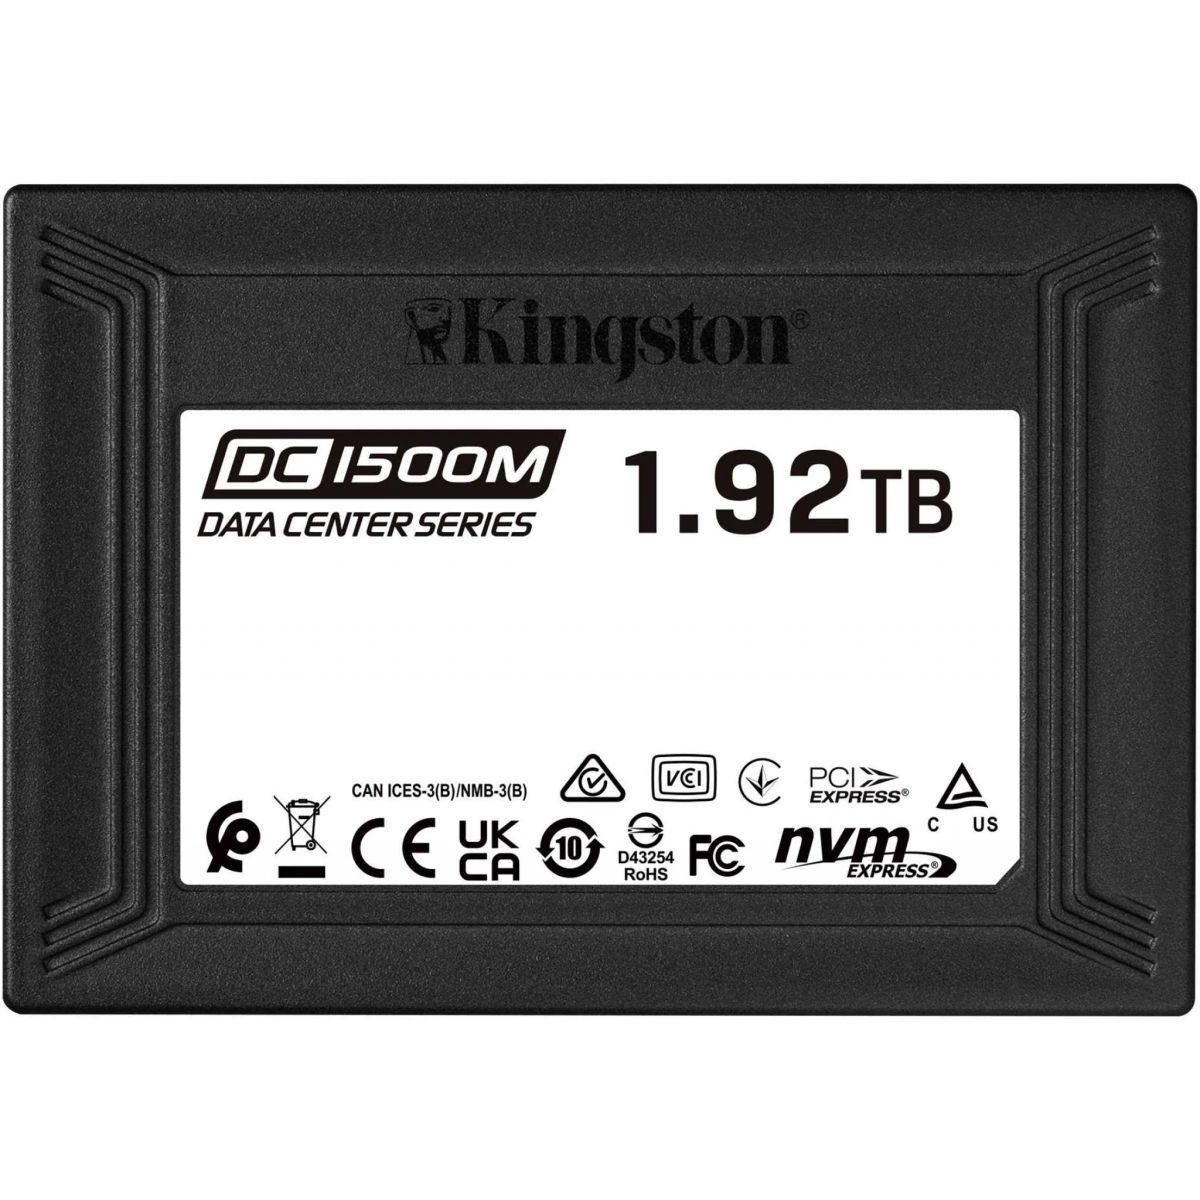 KINGSTON SEDC1500M/1920G, 12 GB, intern 2,5 Zoll, HDD, SSD